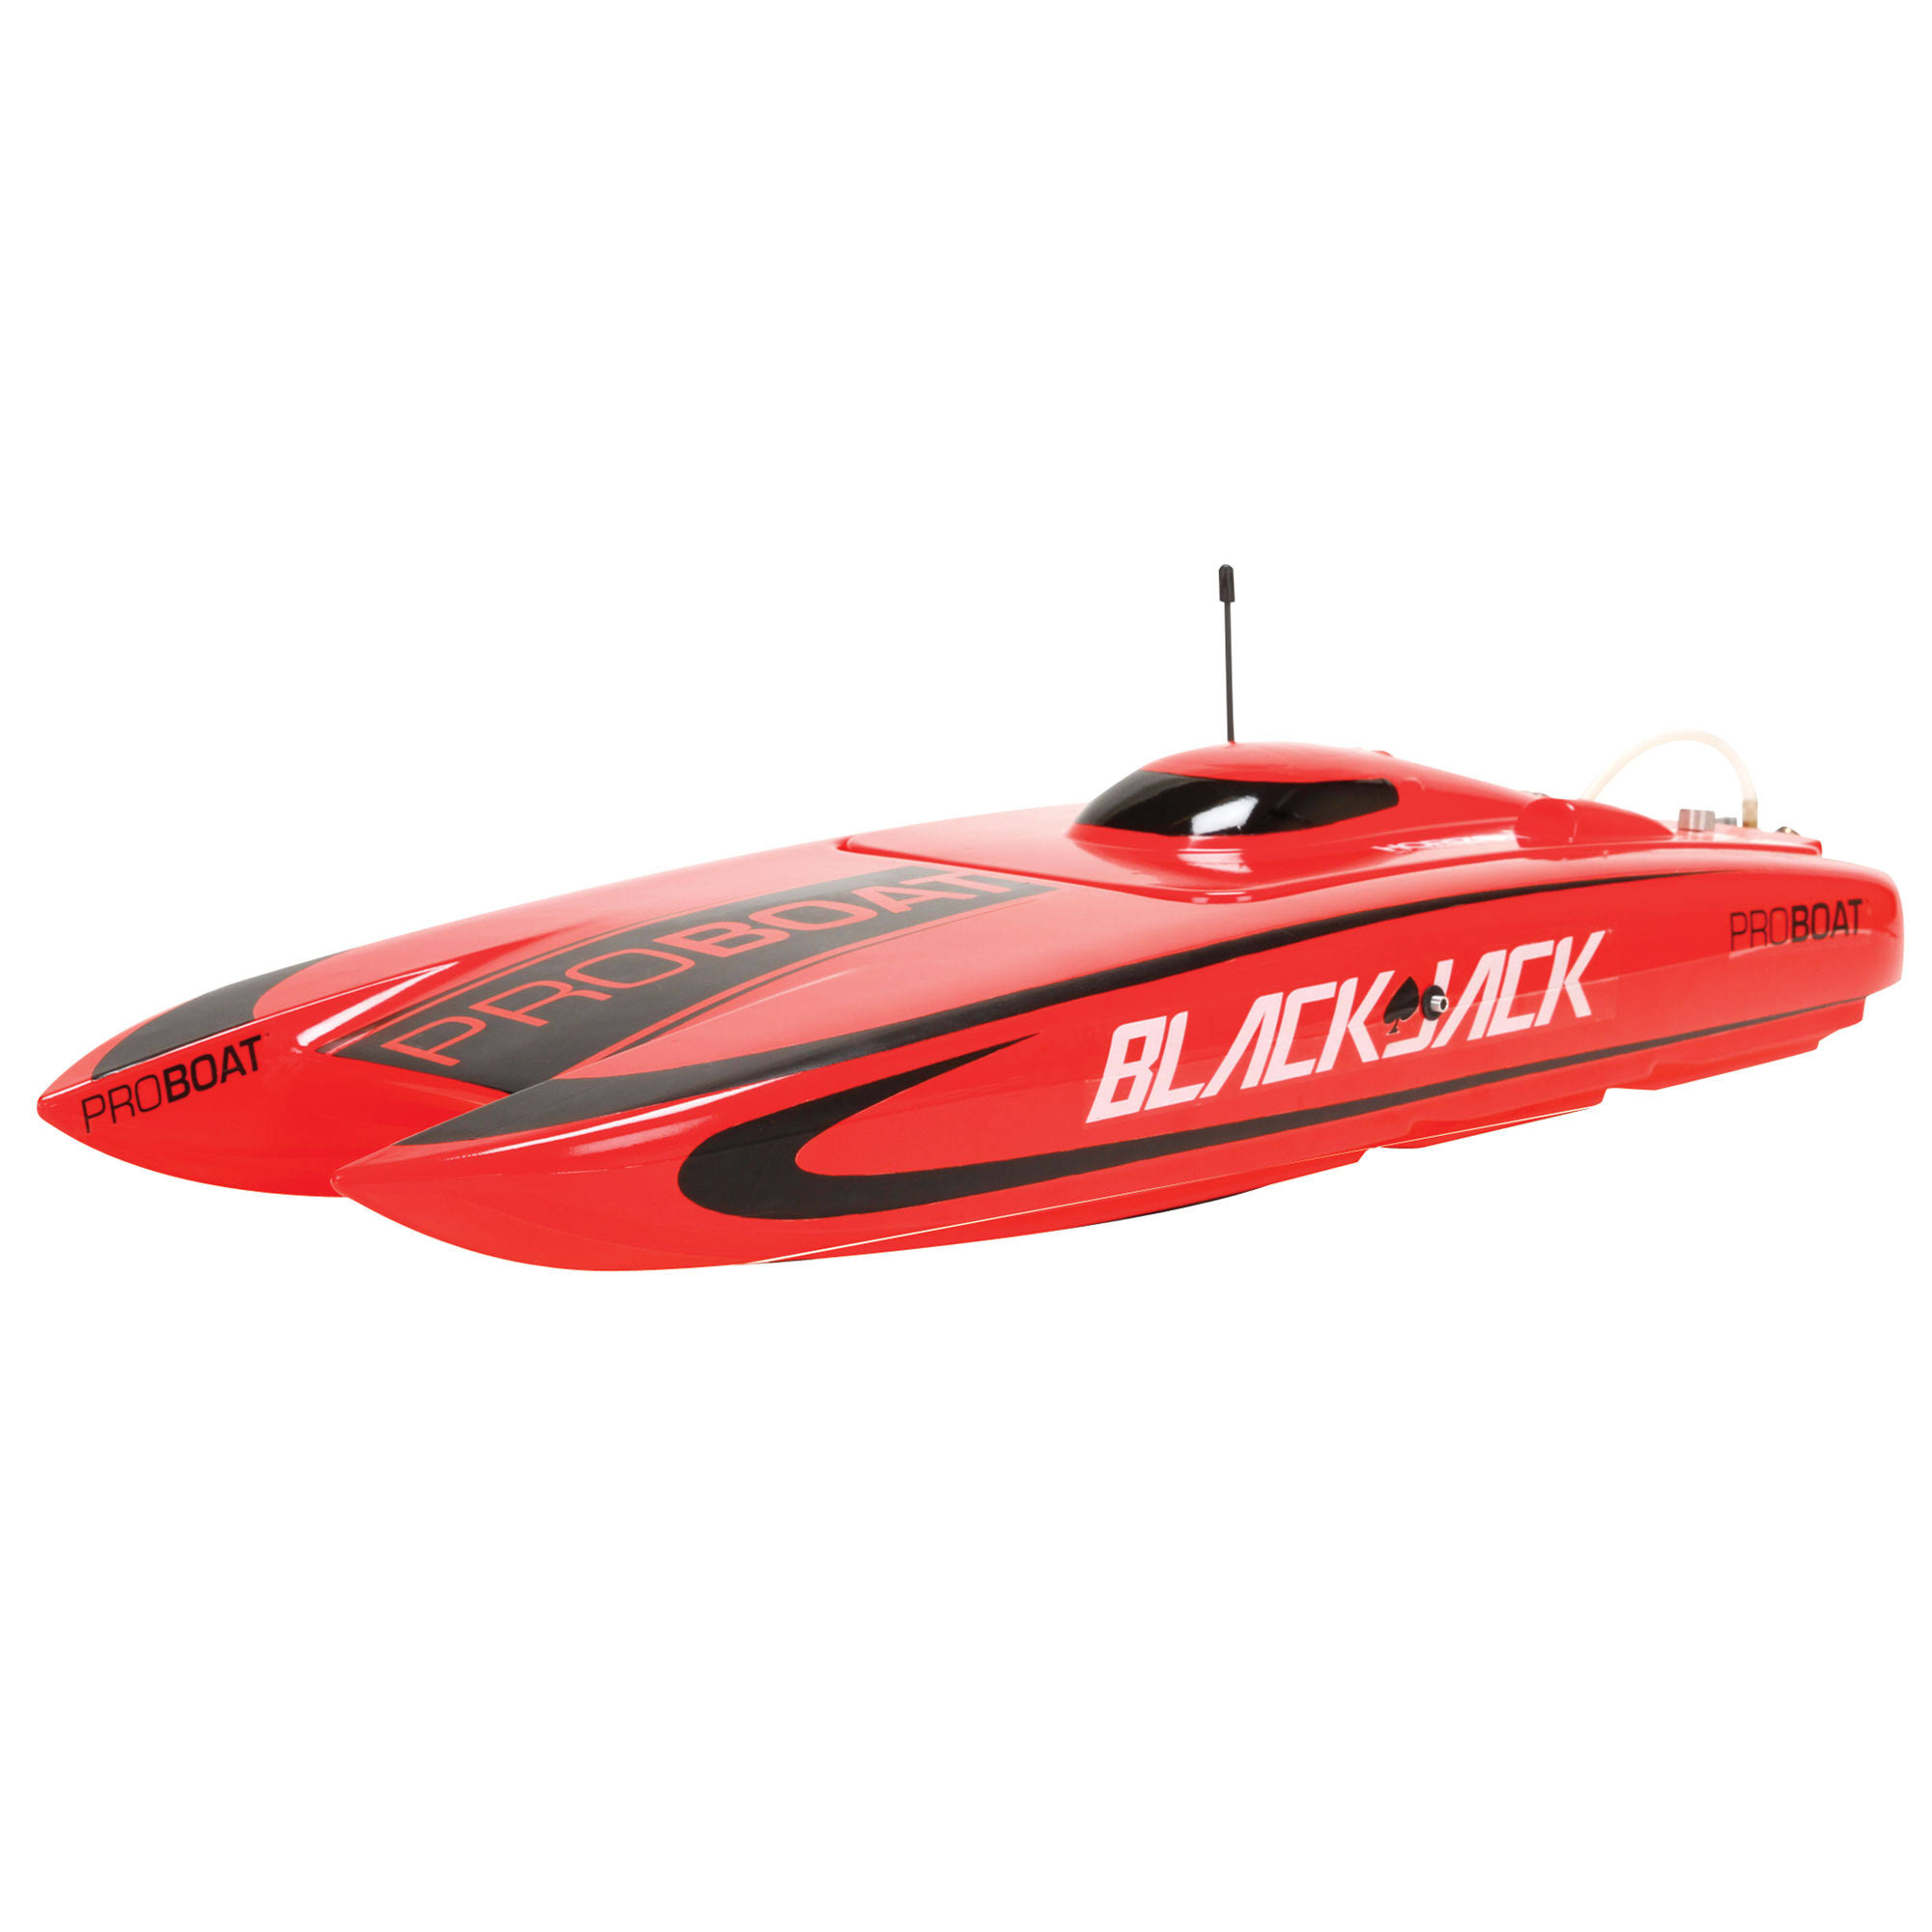 Blackjack Catamaran Brushless Remote Control Boat - Red